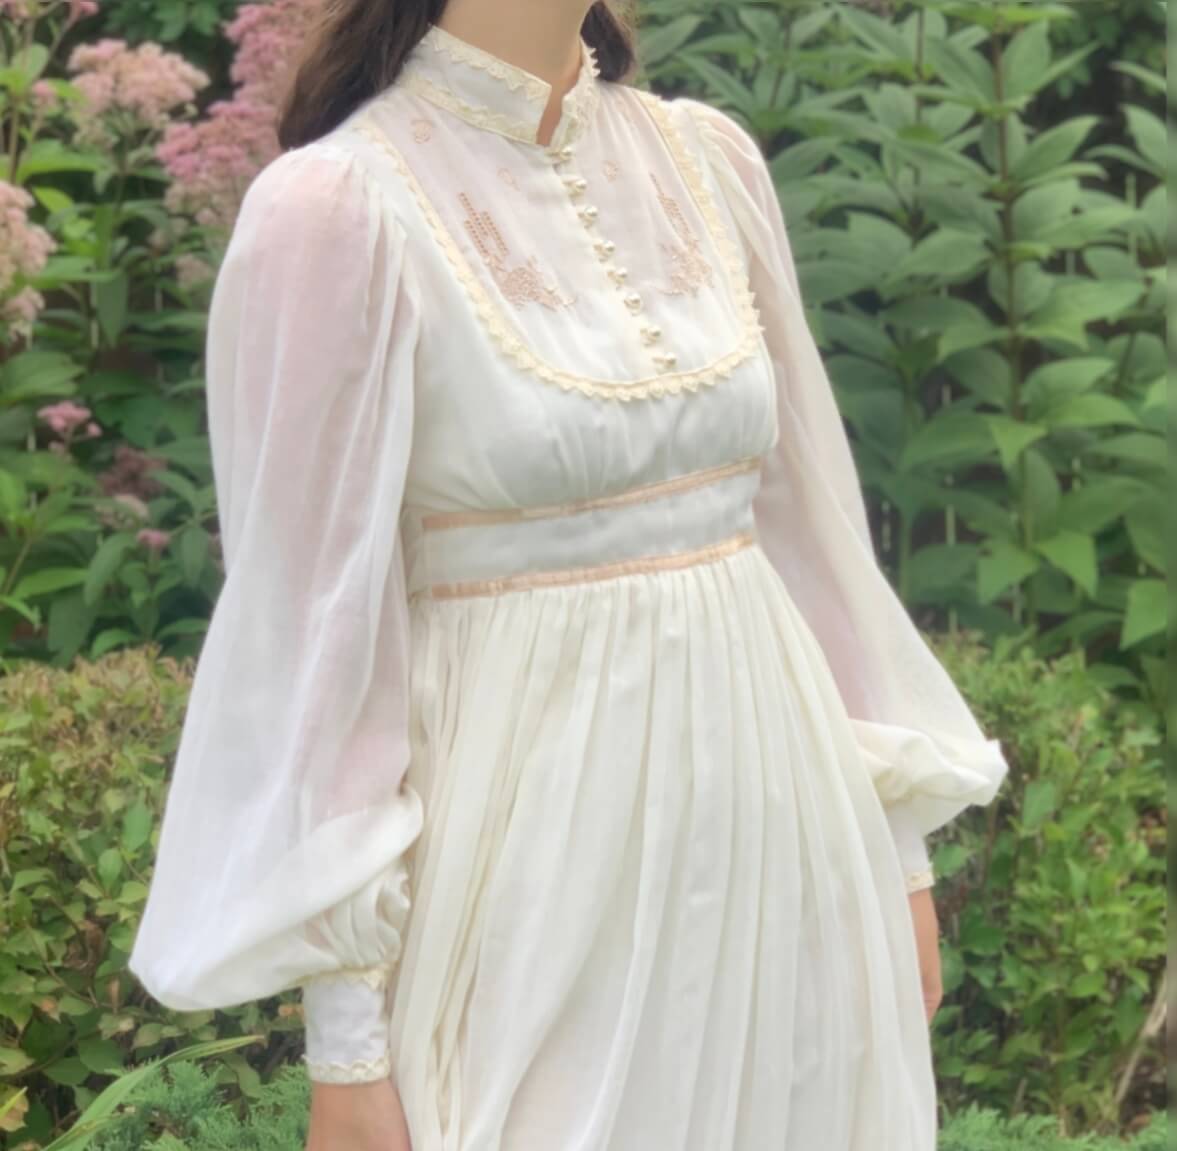 model wearing a white vintage wedding dress